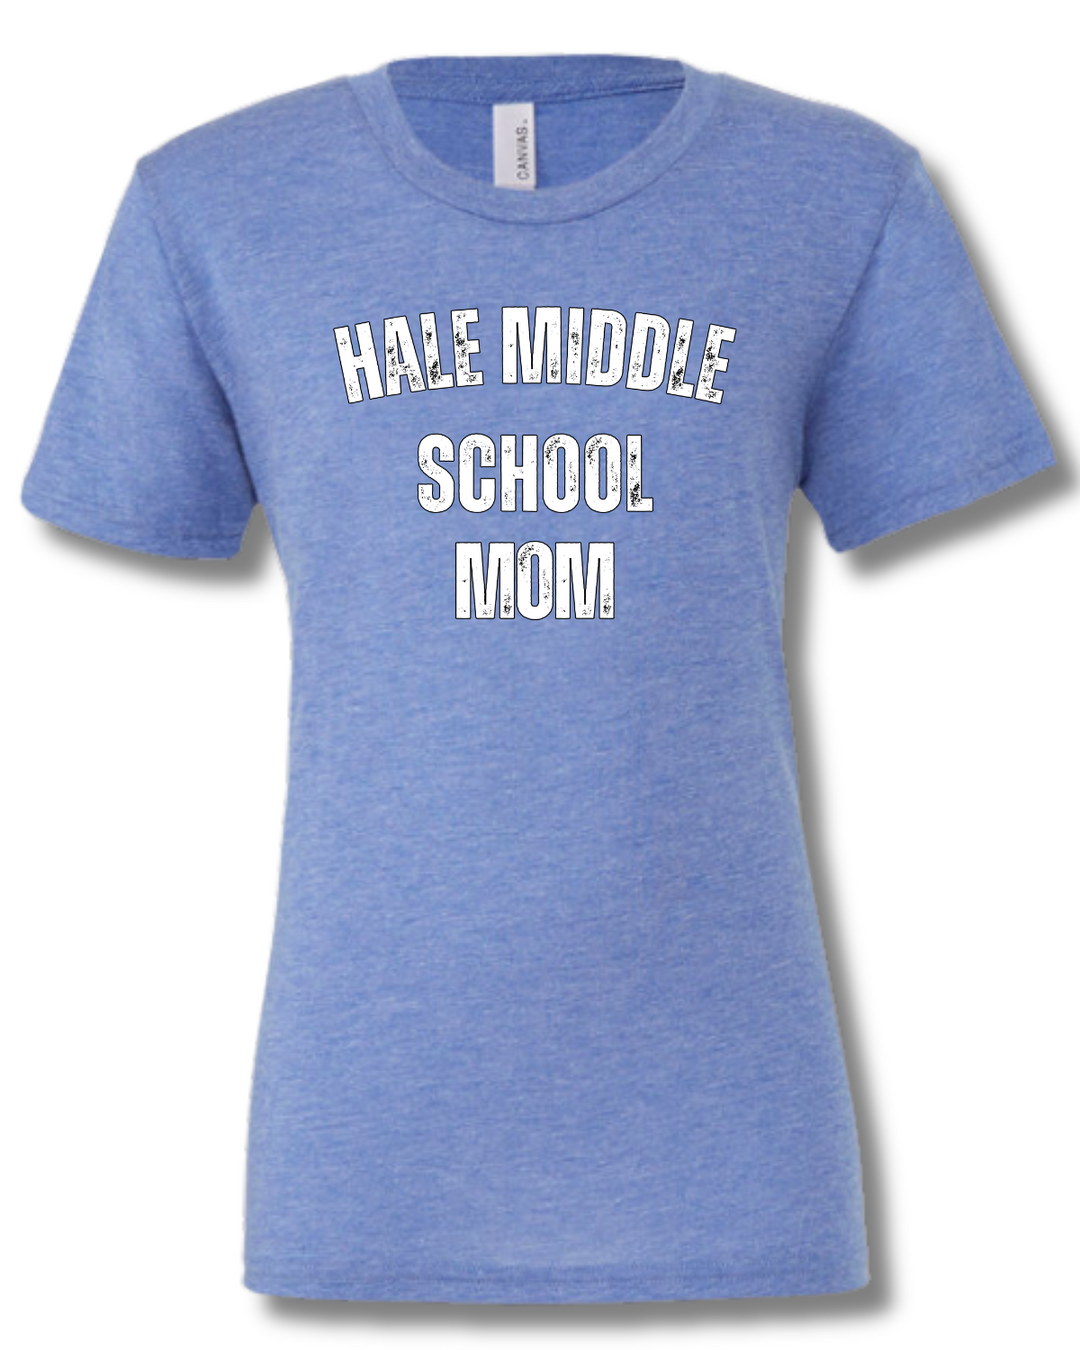 Hale Middle School MOM Unisex Triblend T-Shirt (3413C)